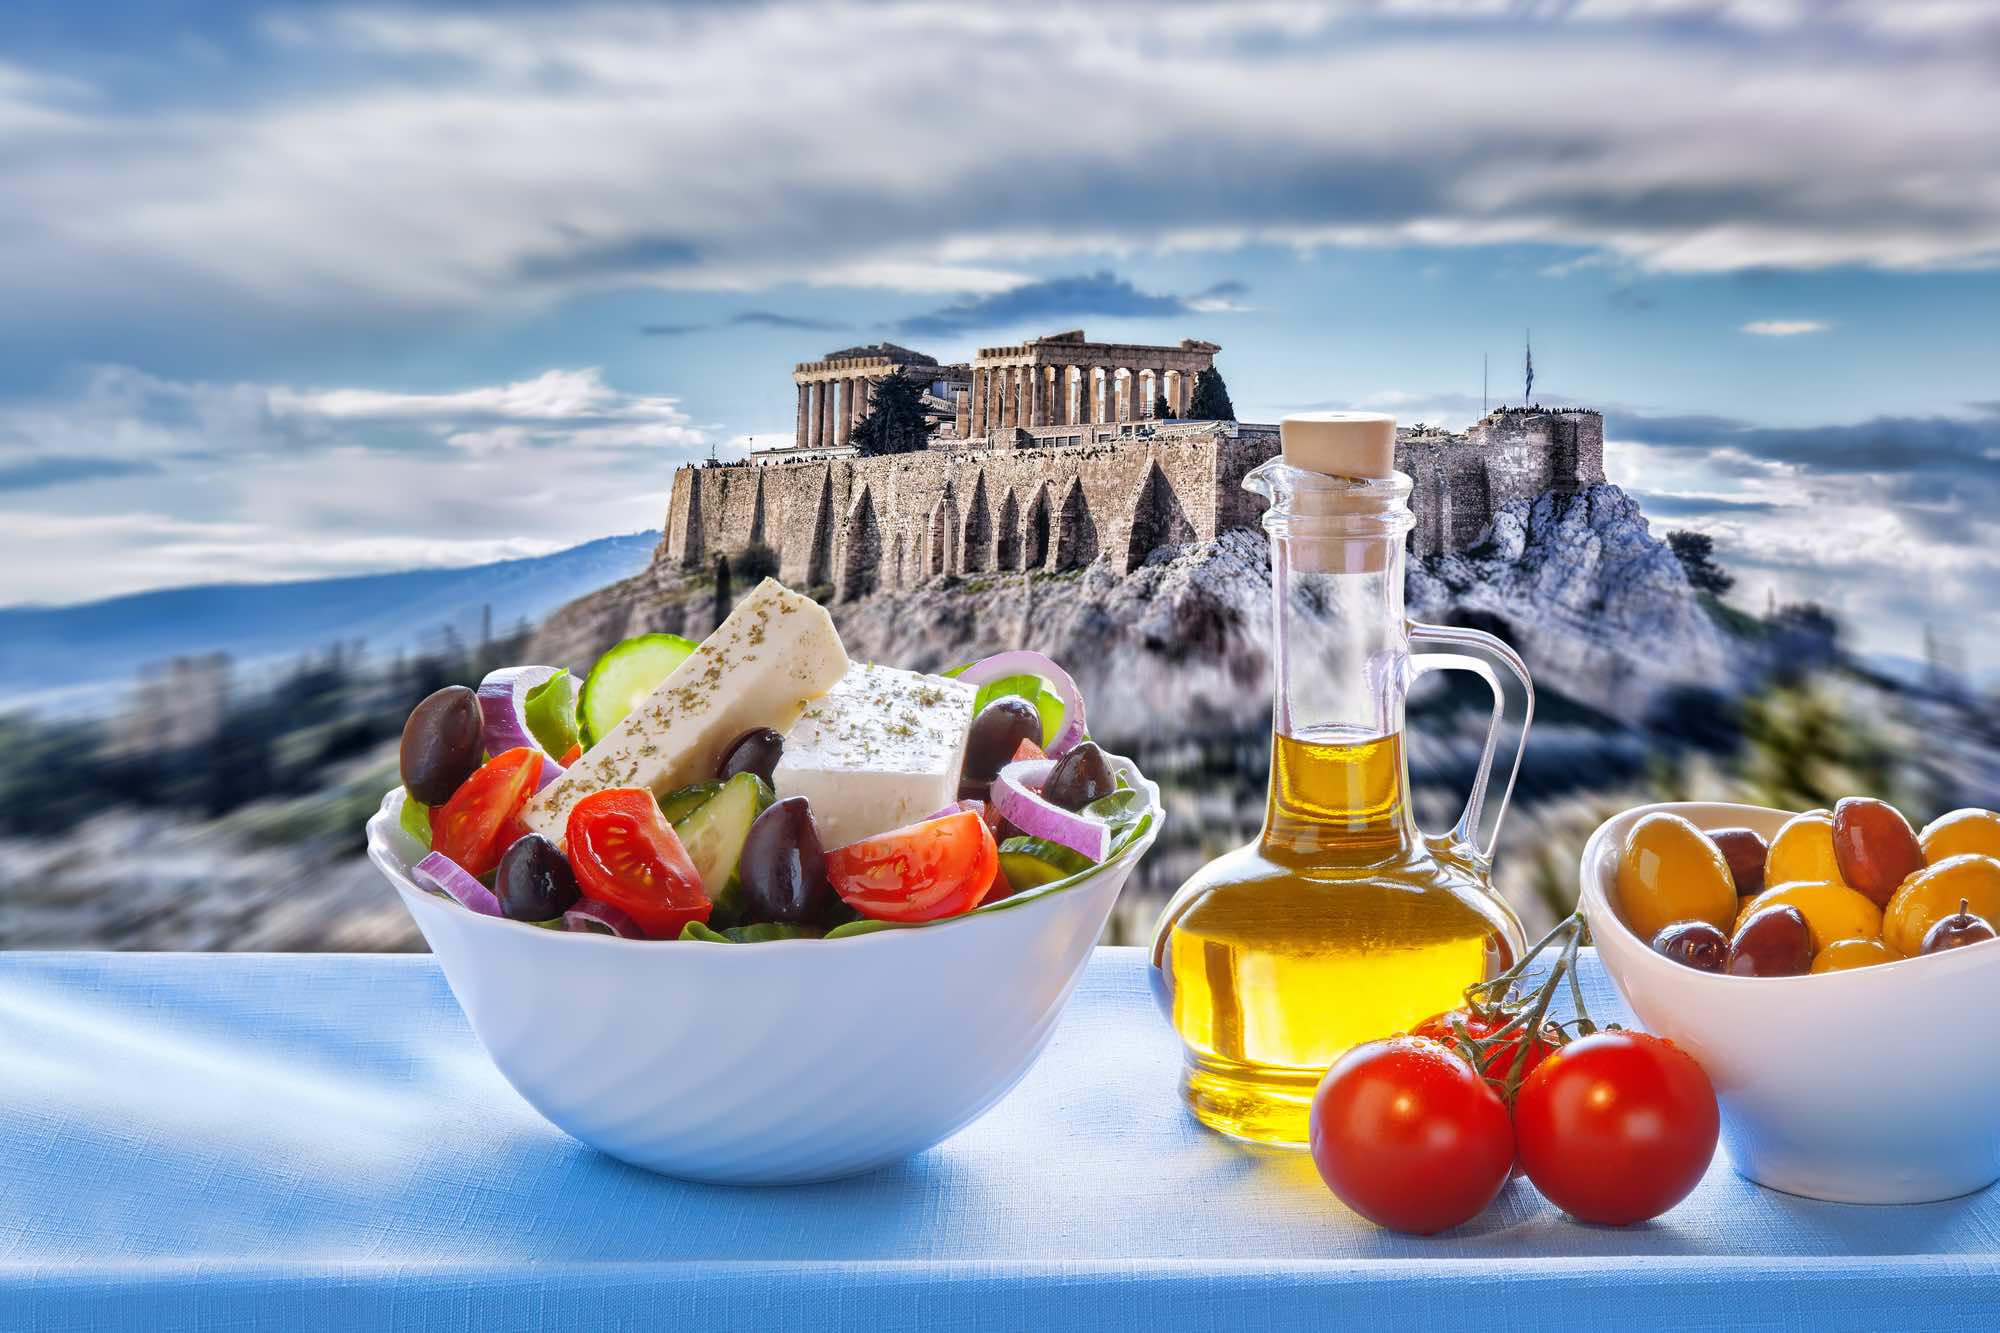 images/all/acropolis-food-tour.jpg